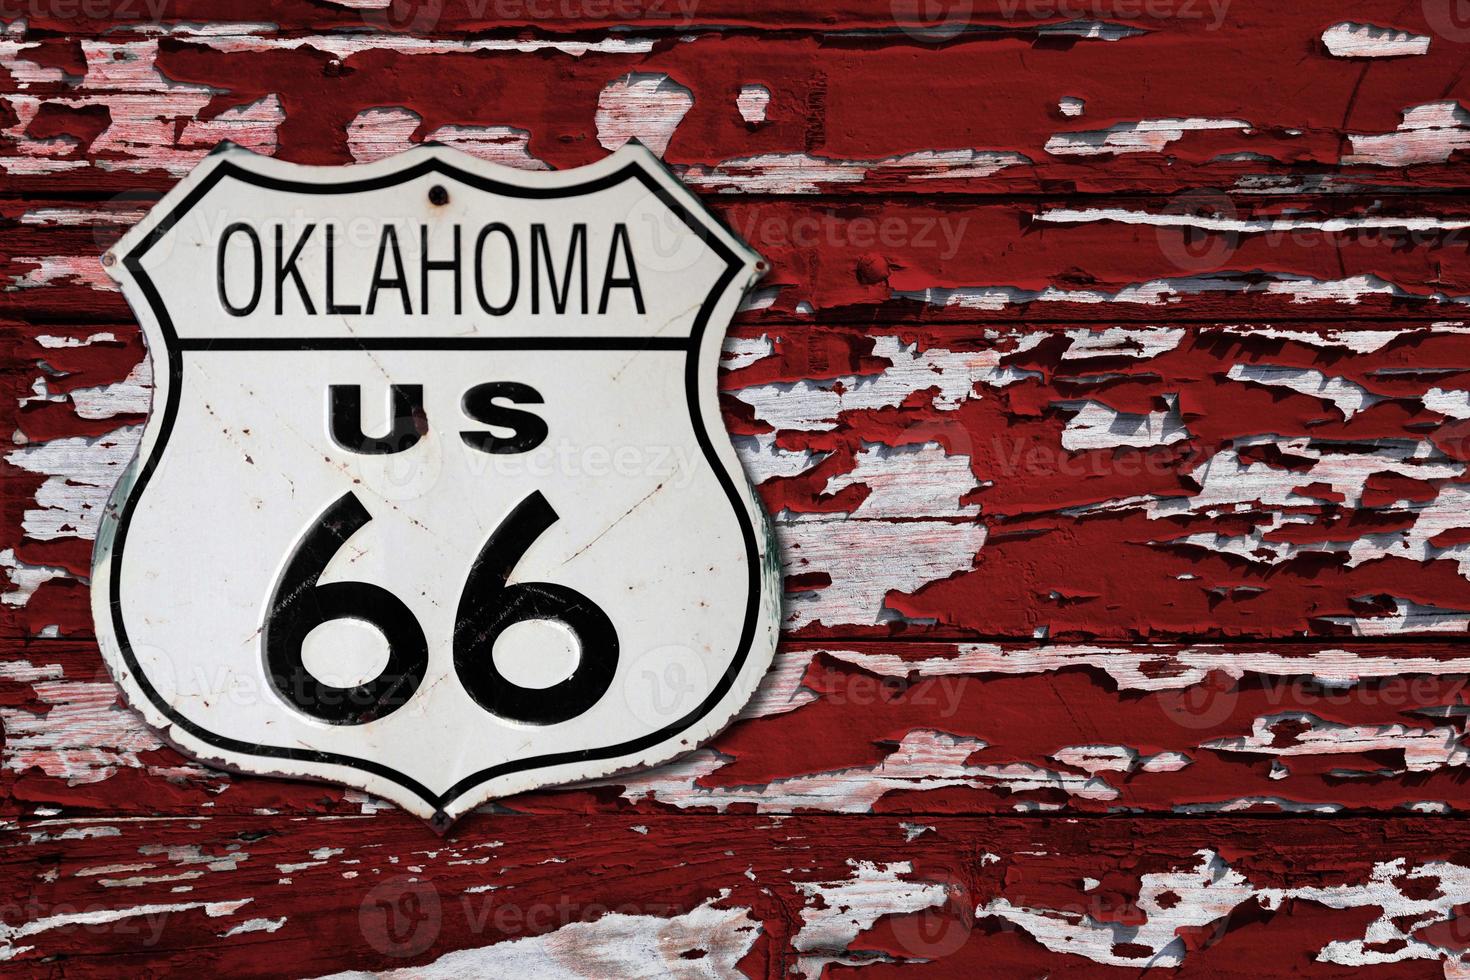 Oklahoma US 66 route sign photo